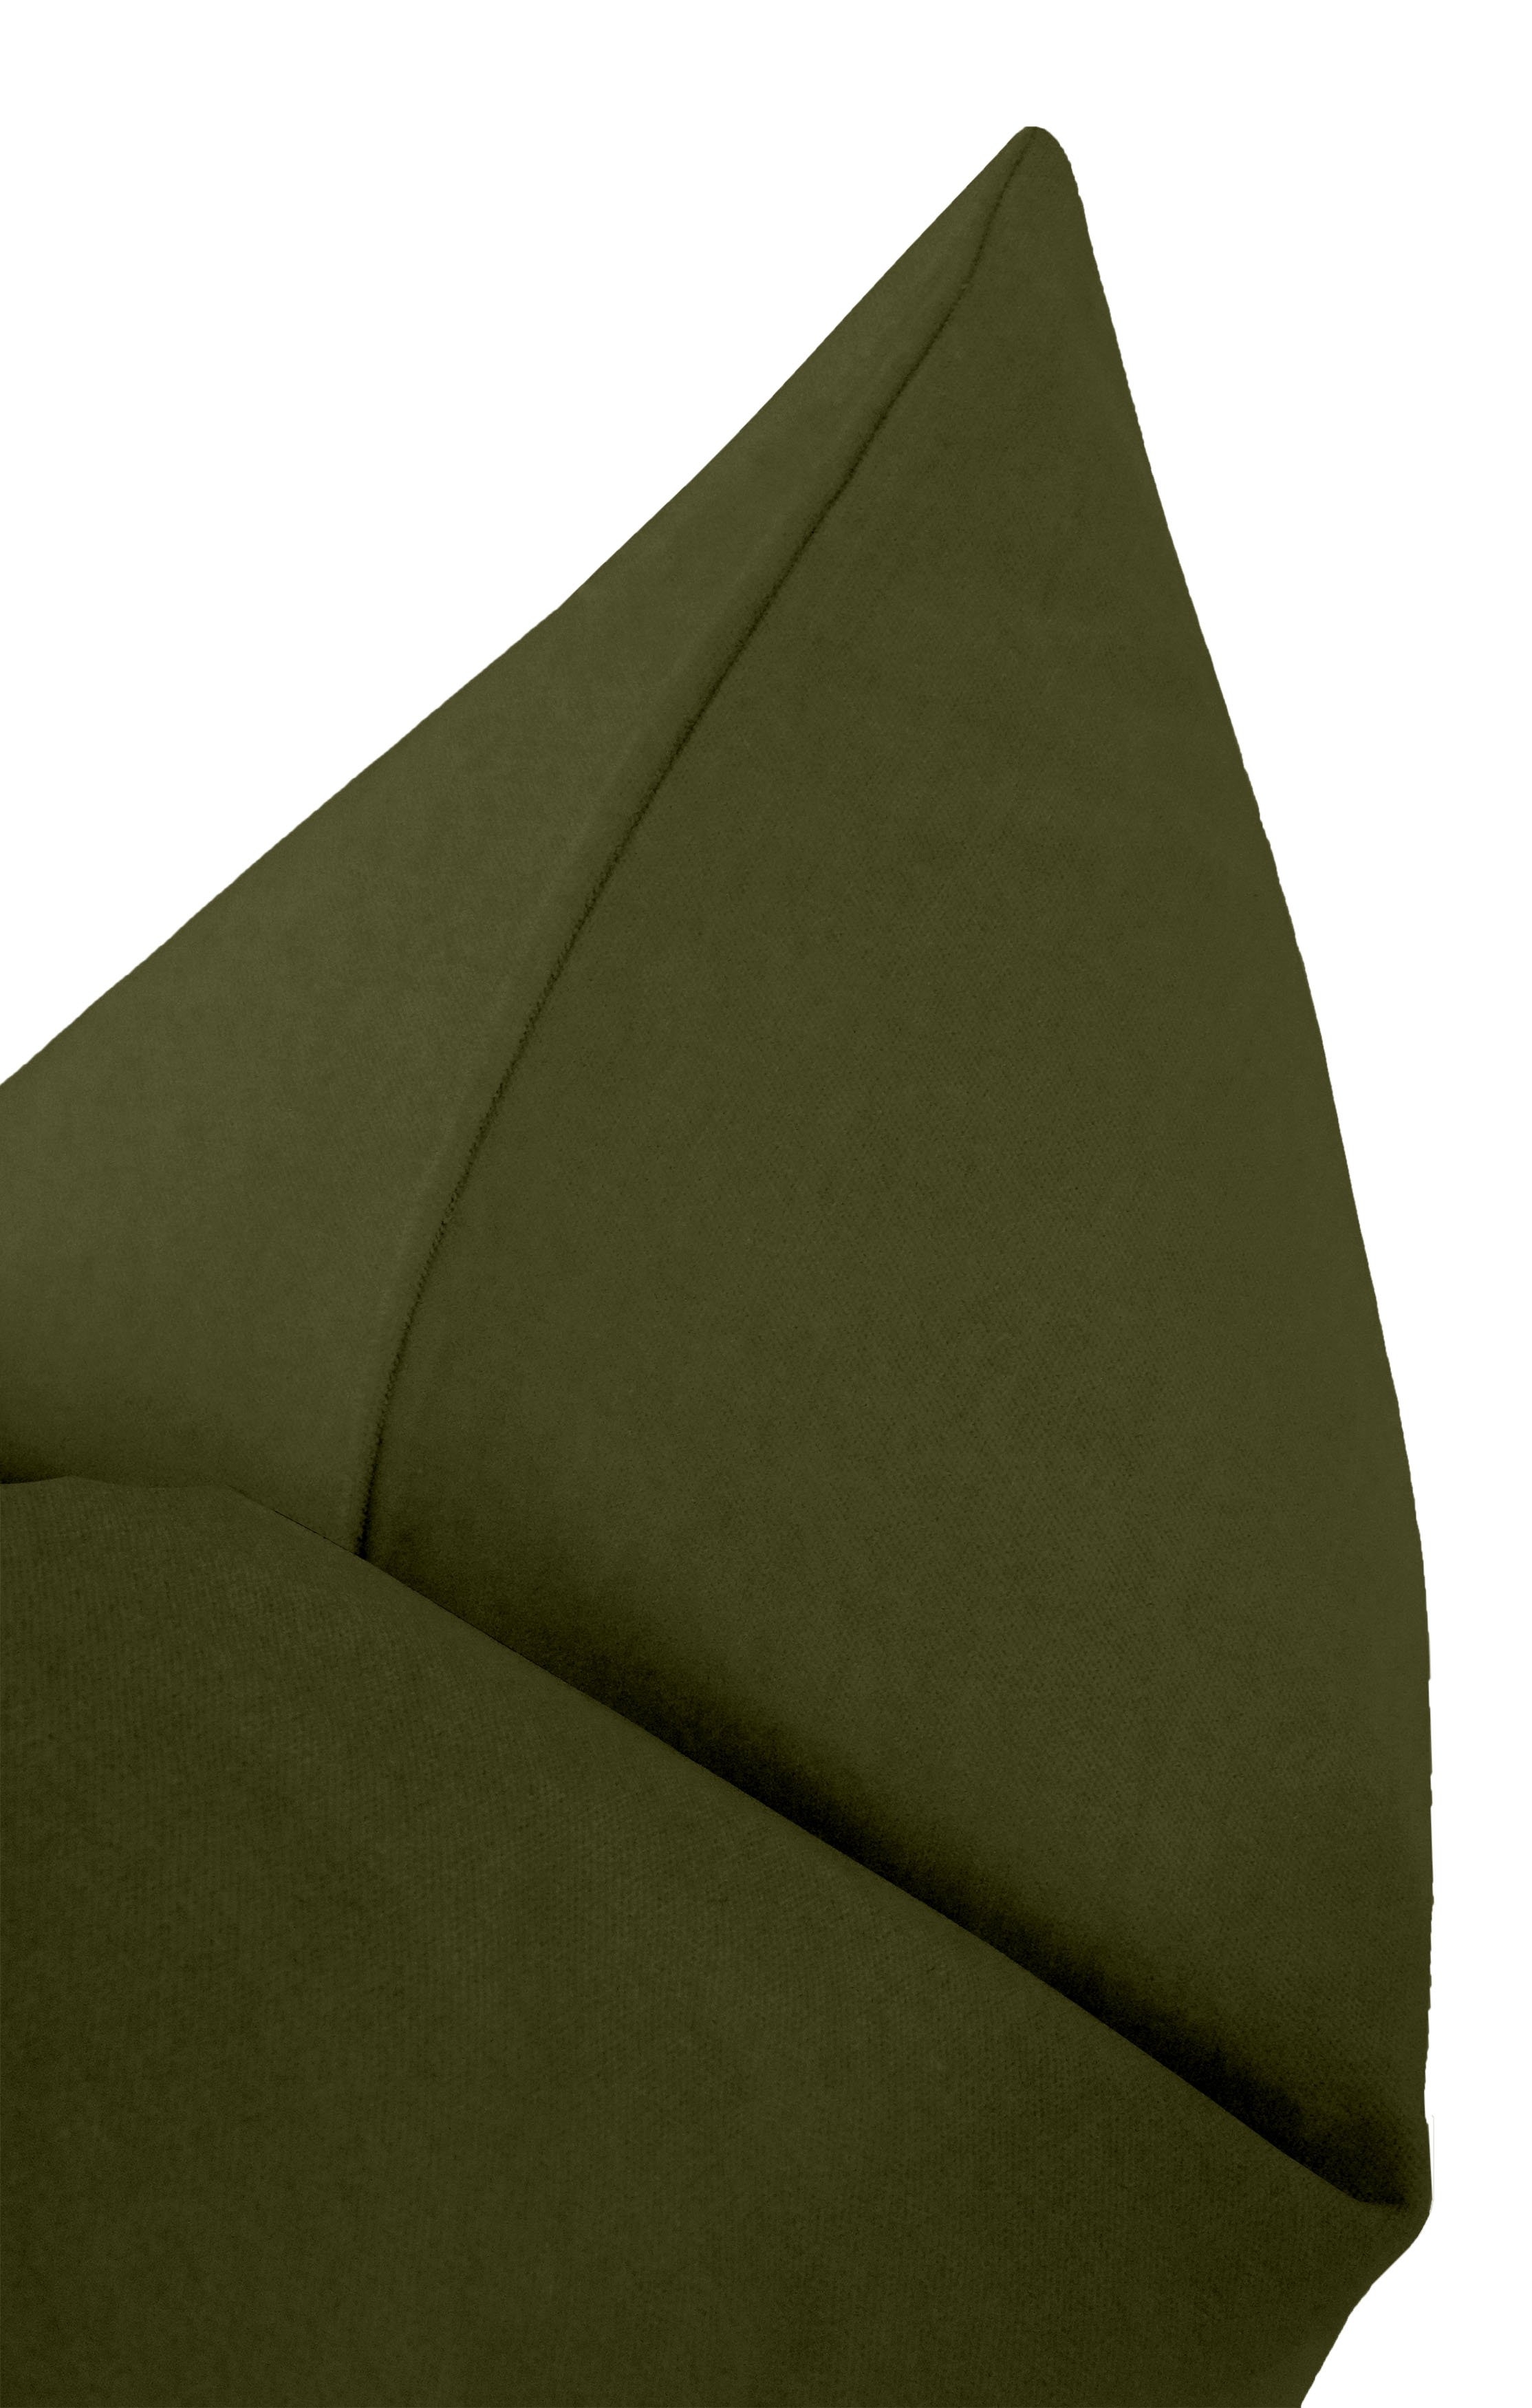 Classic Velvet Lumbar Pillow Cover, Olive, 20" x 20" - Image 2